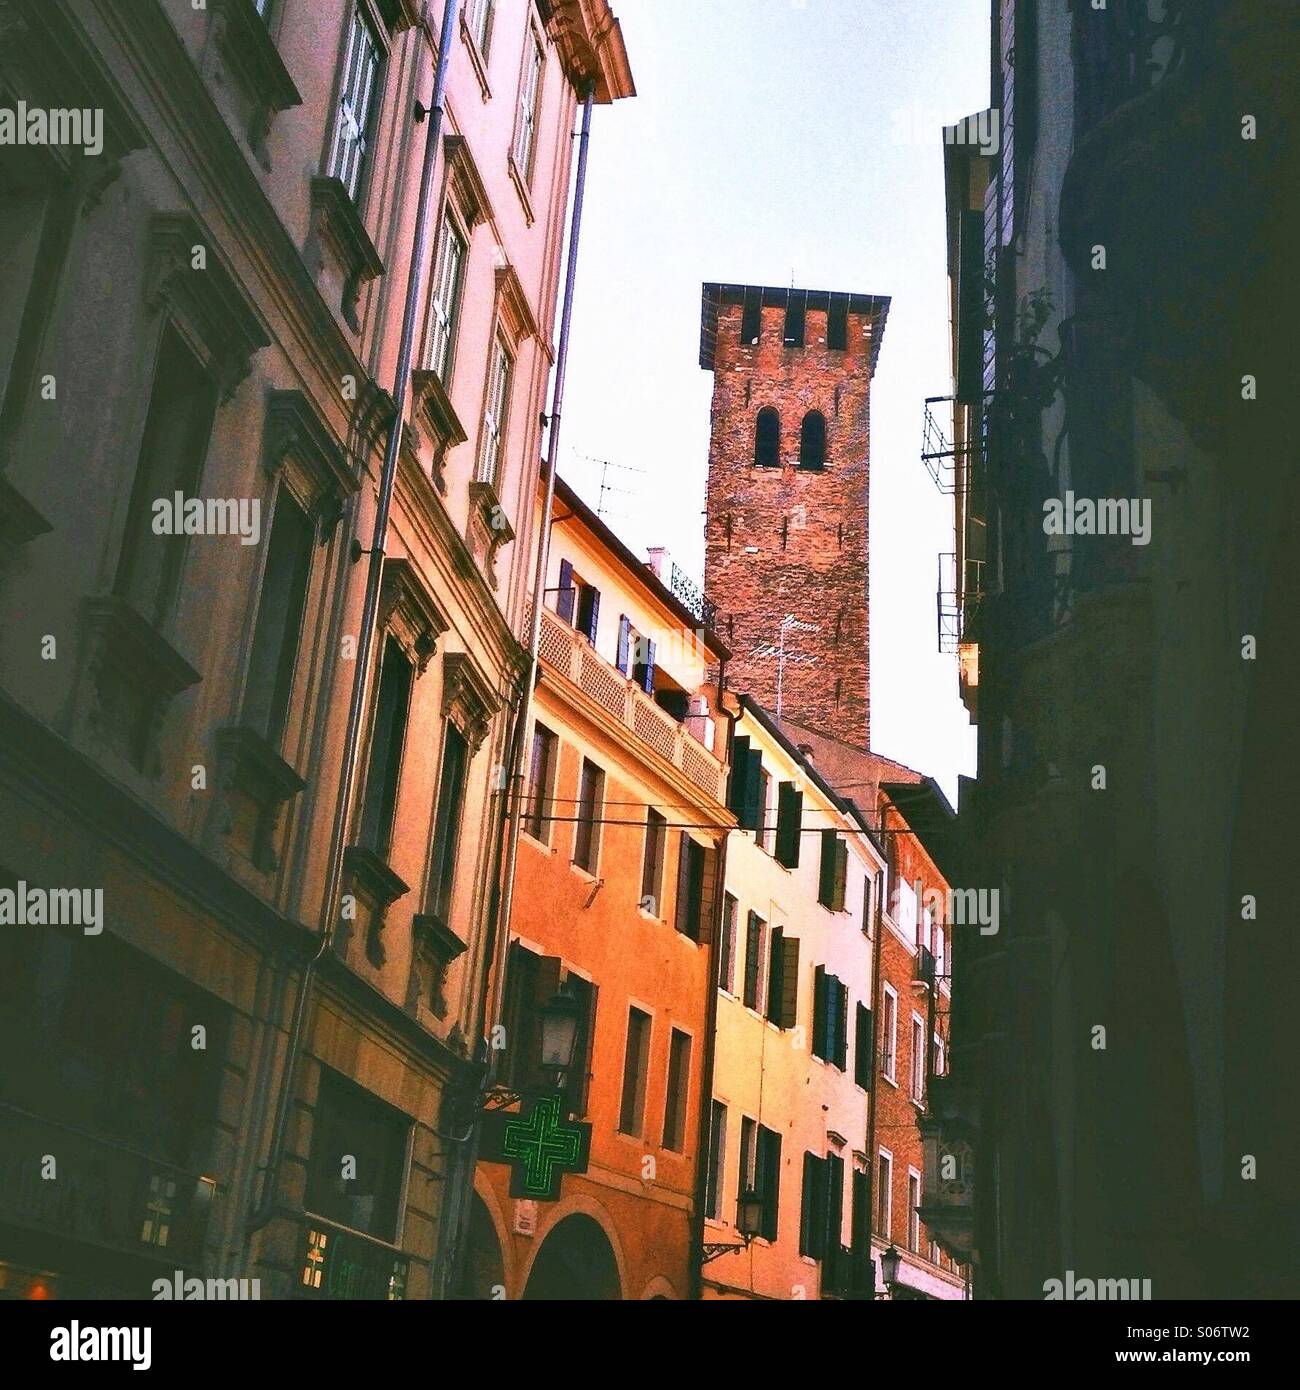 Anziani Tower, Padoue, Italie Banque D'Images